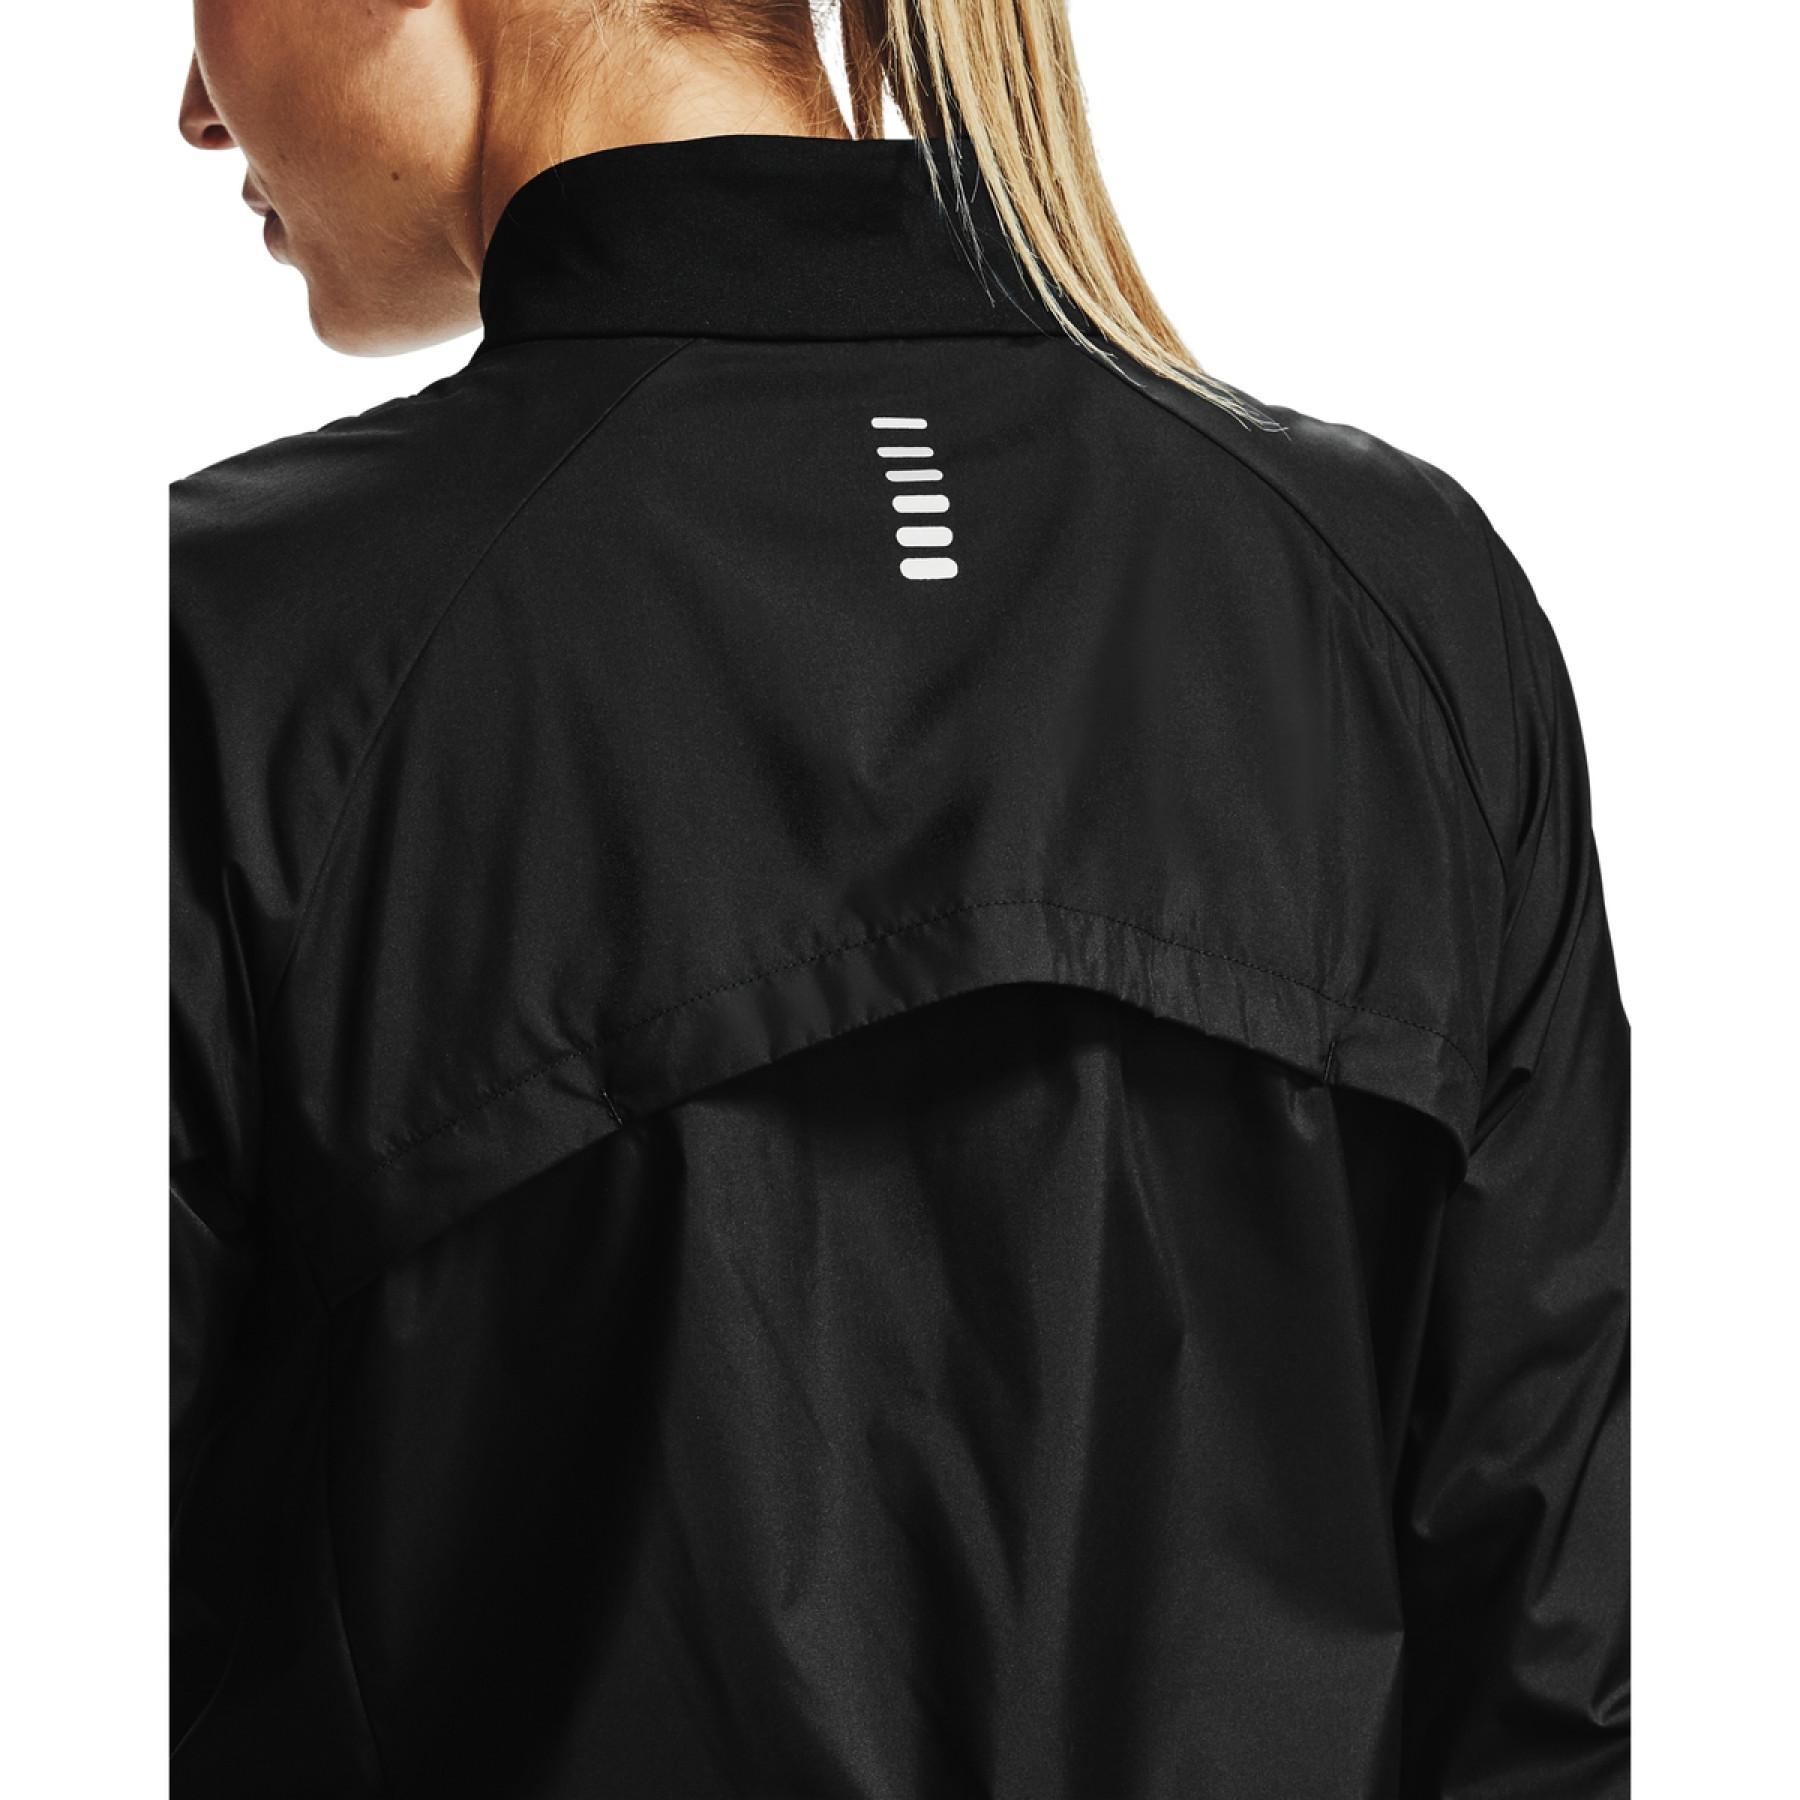 Women's jacket Under Armour Run Insulate Hybrid